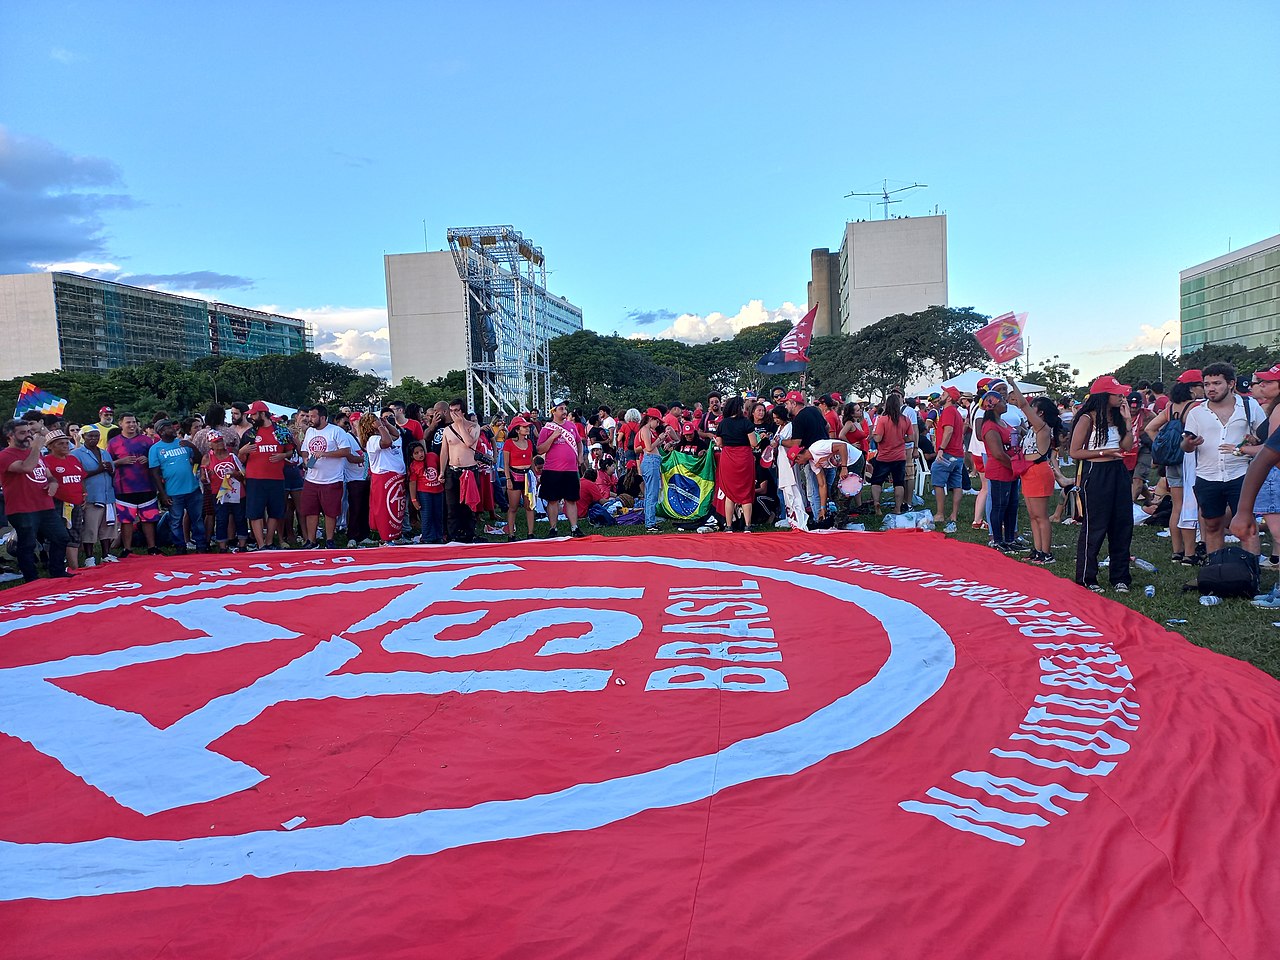 Celebrations at the inauguration ceremony of Luís Inácio Lula da Silva, in Brasília, on January 1, 2023. Photo: Sintegrity under Creative Commons Attribution-Share Alike 4.0 International license.